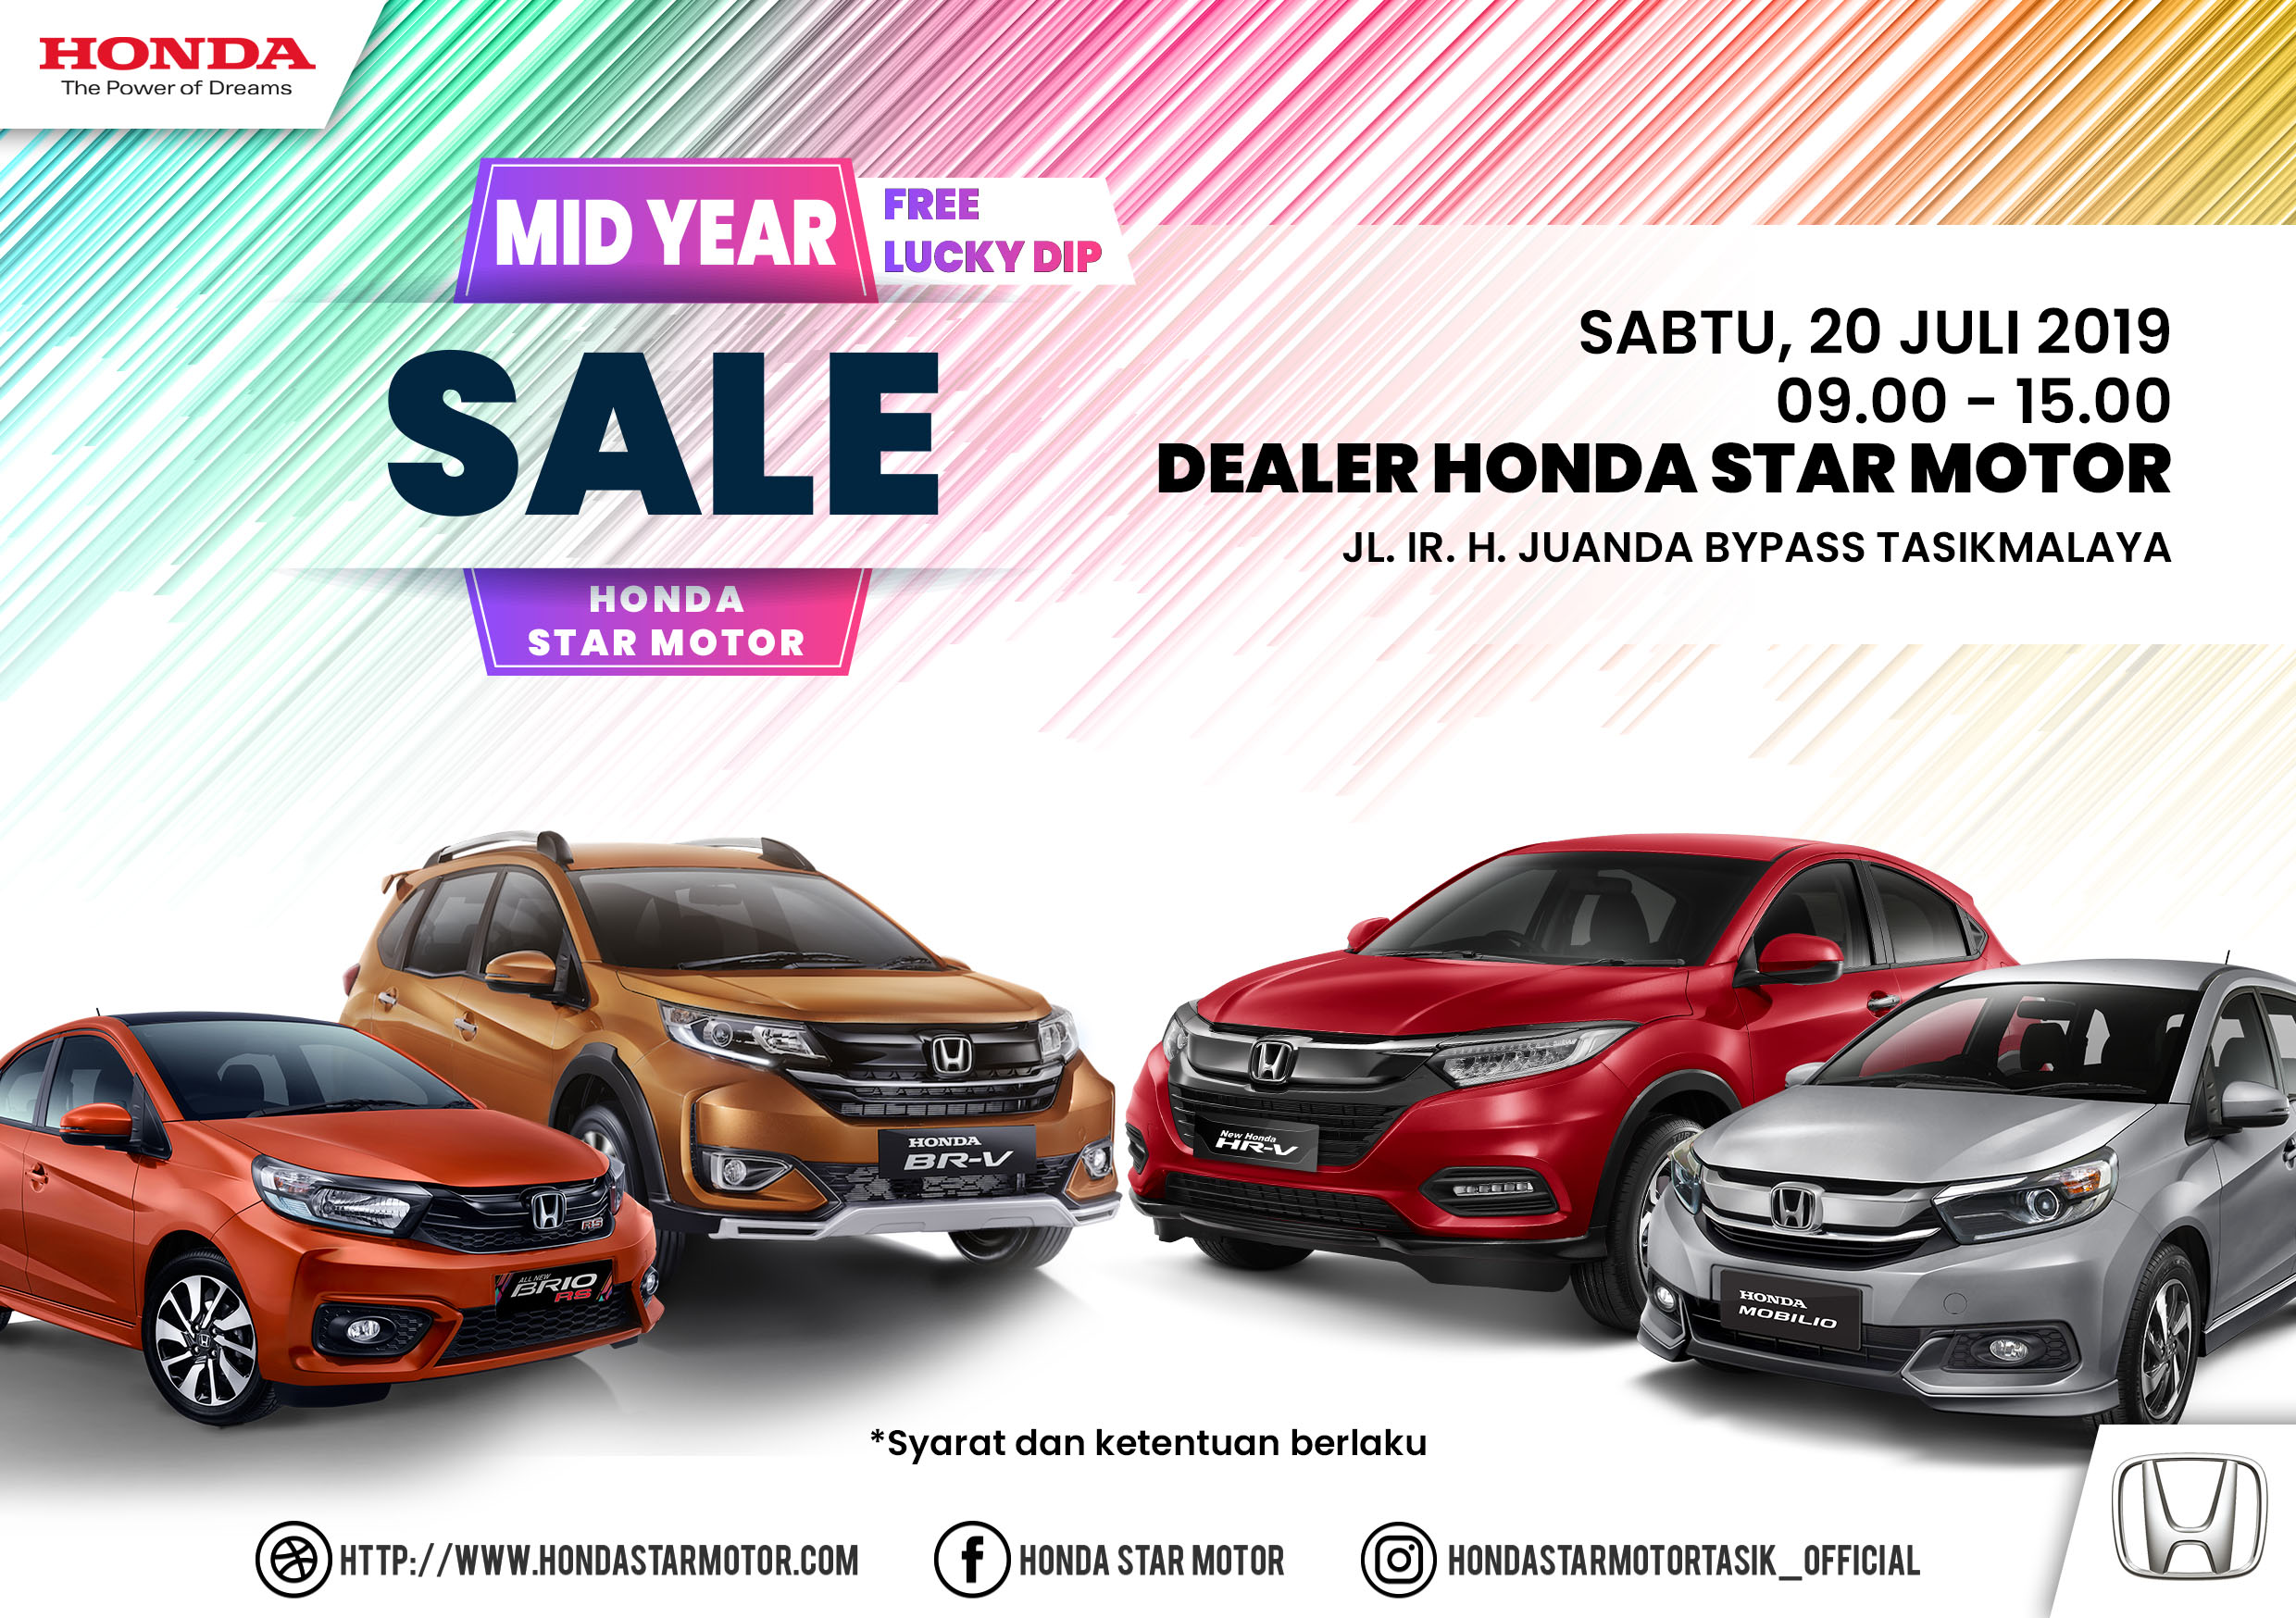 Honda Mid Year Sale, 20 Juli 2019